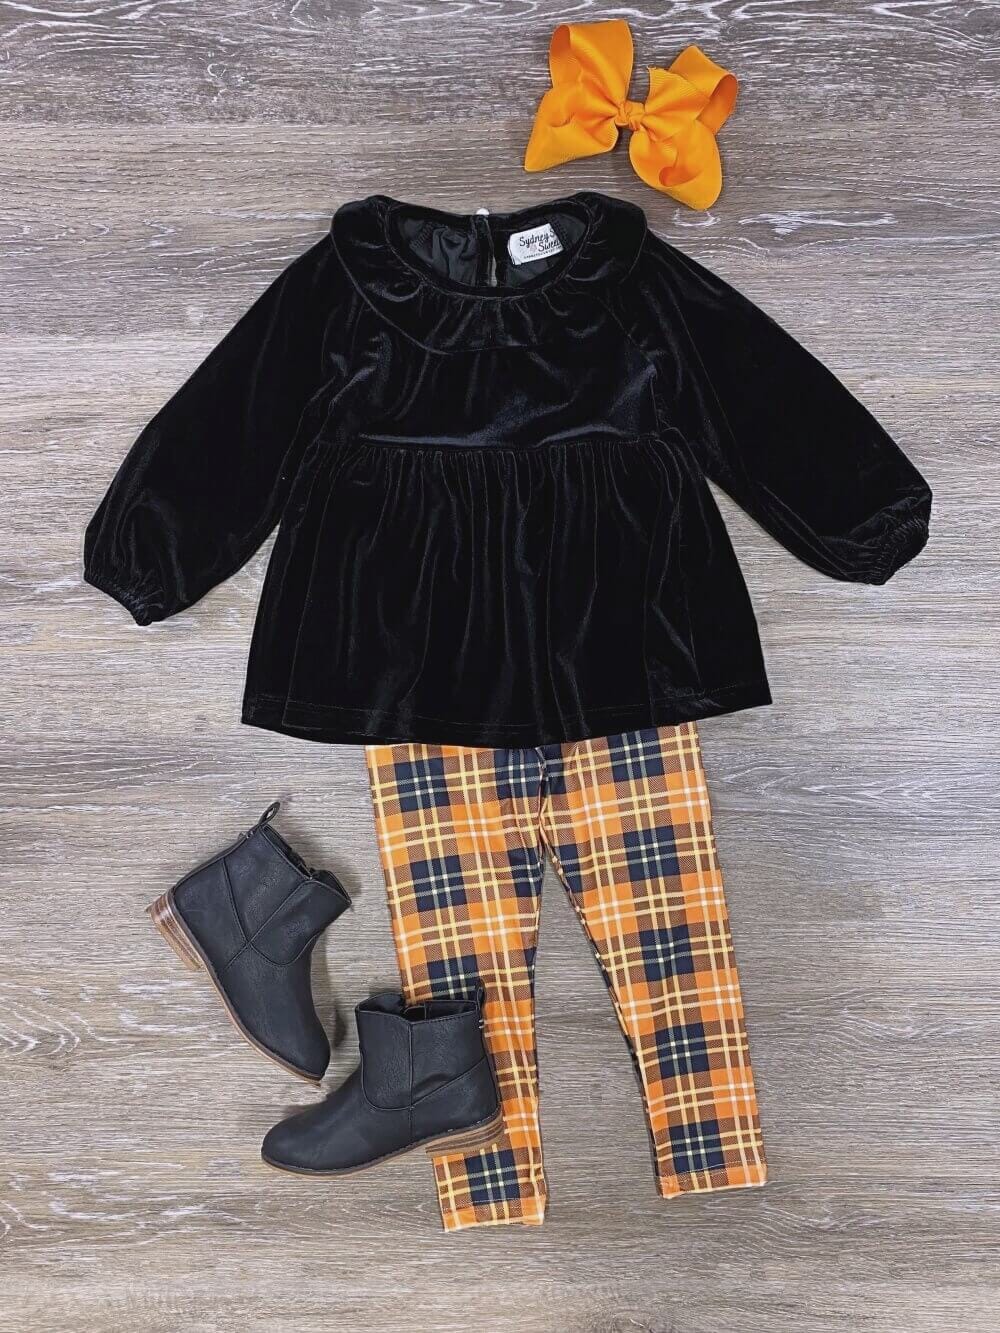 Orange & Black Velvet Top Plaid Leggings Outfit 2T